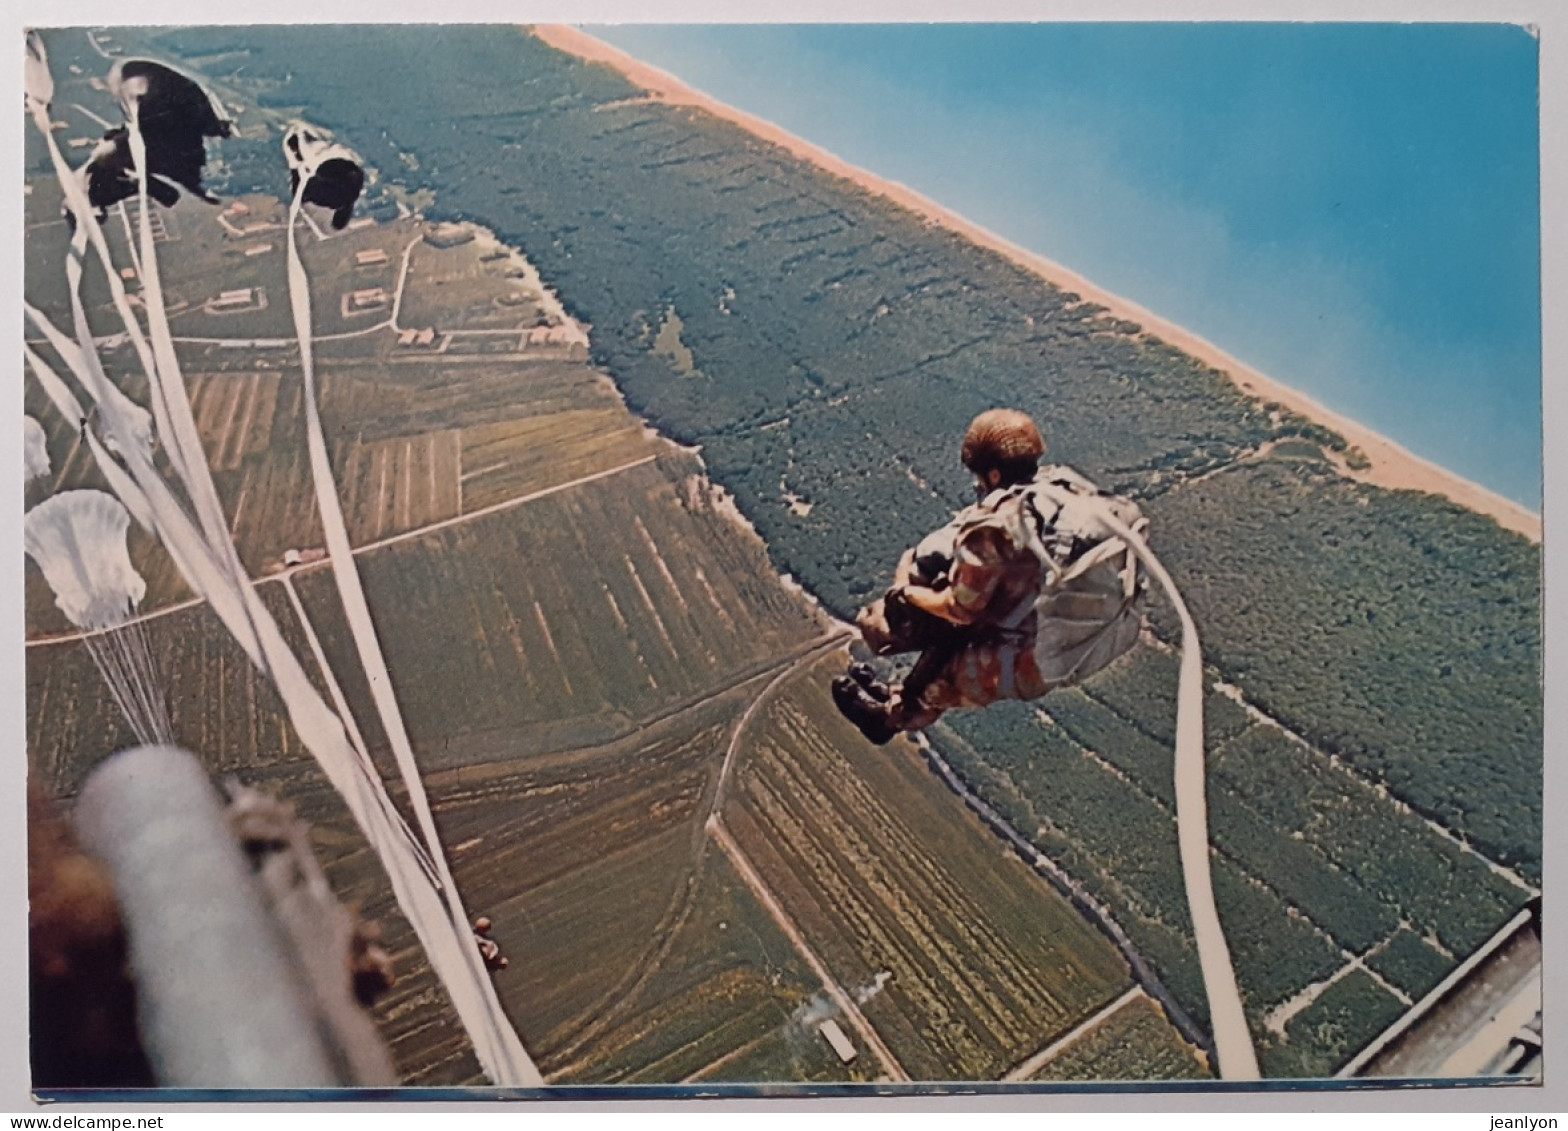 CARABINIER PARACHUTISTE ITALIEN / MILITAIRE - Saut En Parachute - Carabinieri Paracadutisti / Carte Italienne - Parachutting